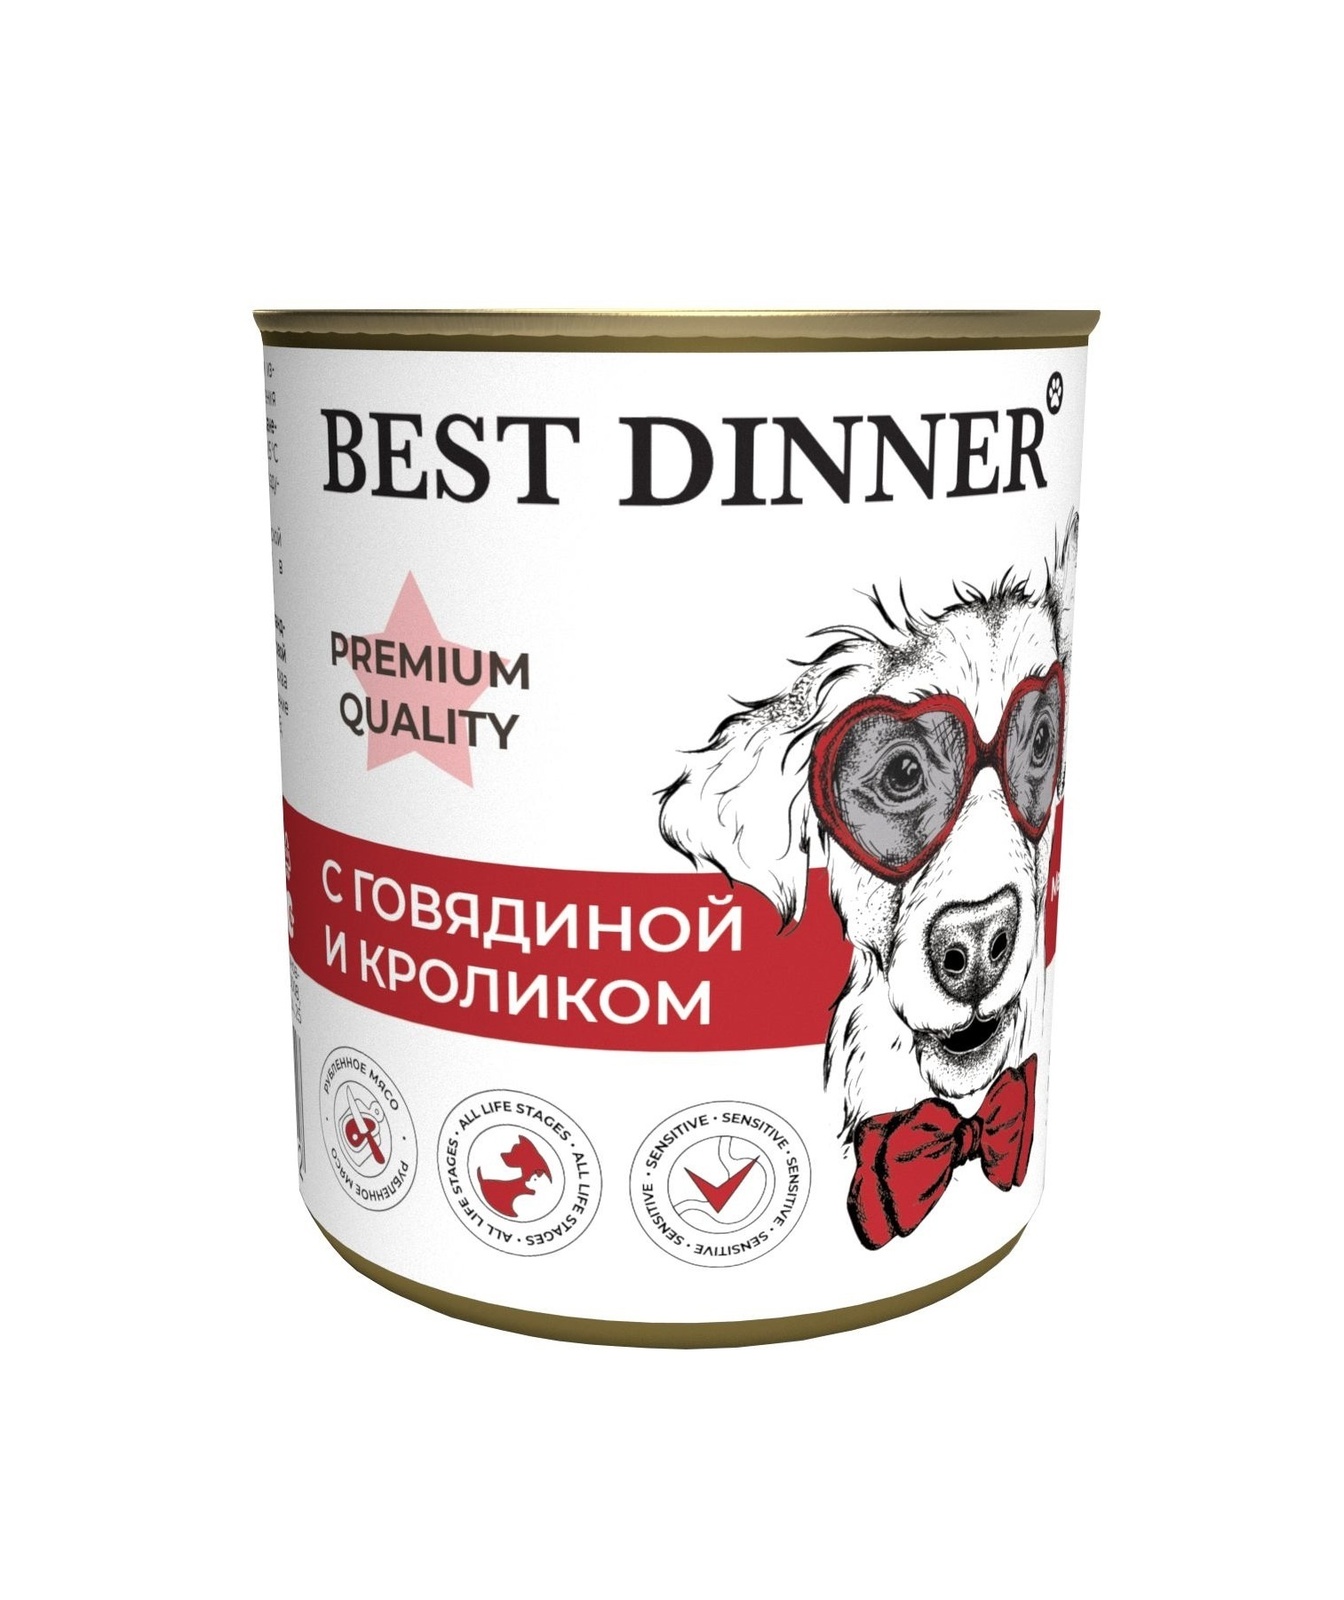 Best Dinner Best Dinner консервы Premium меню №3 С говядиной и кроликом (340 г) best dinner best dinner консервы premium меню 5 с ягненком и рисом 340 г